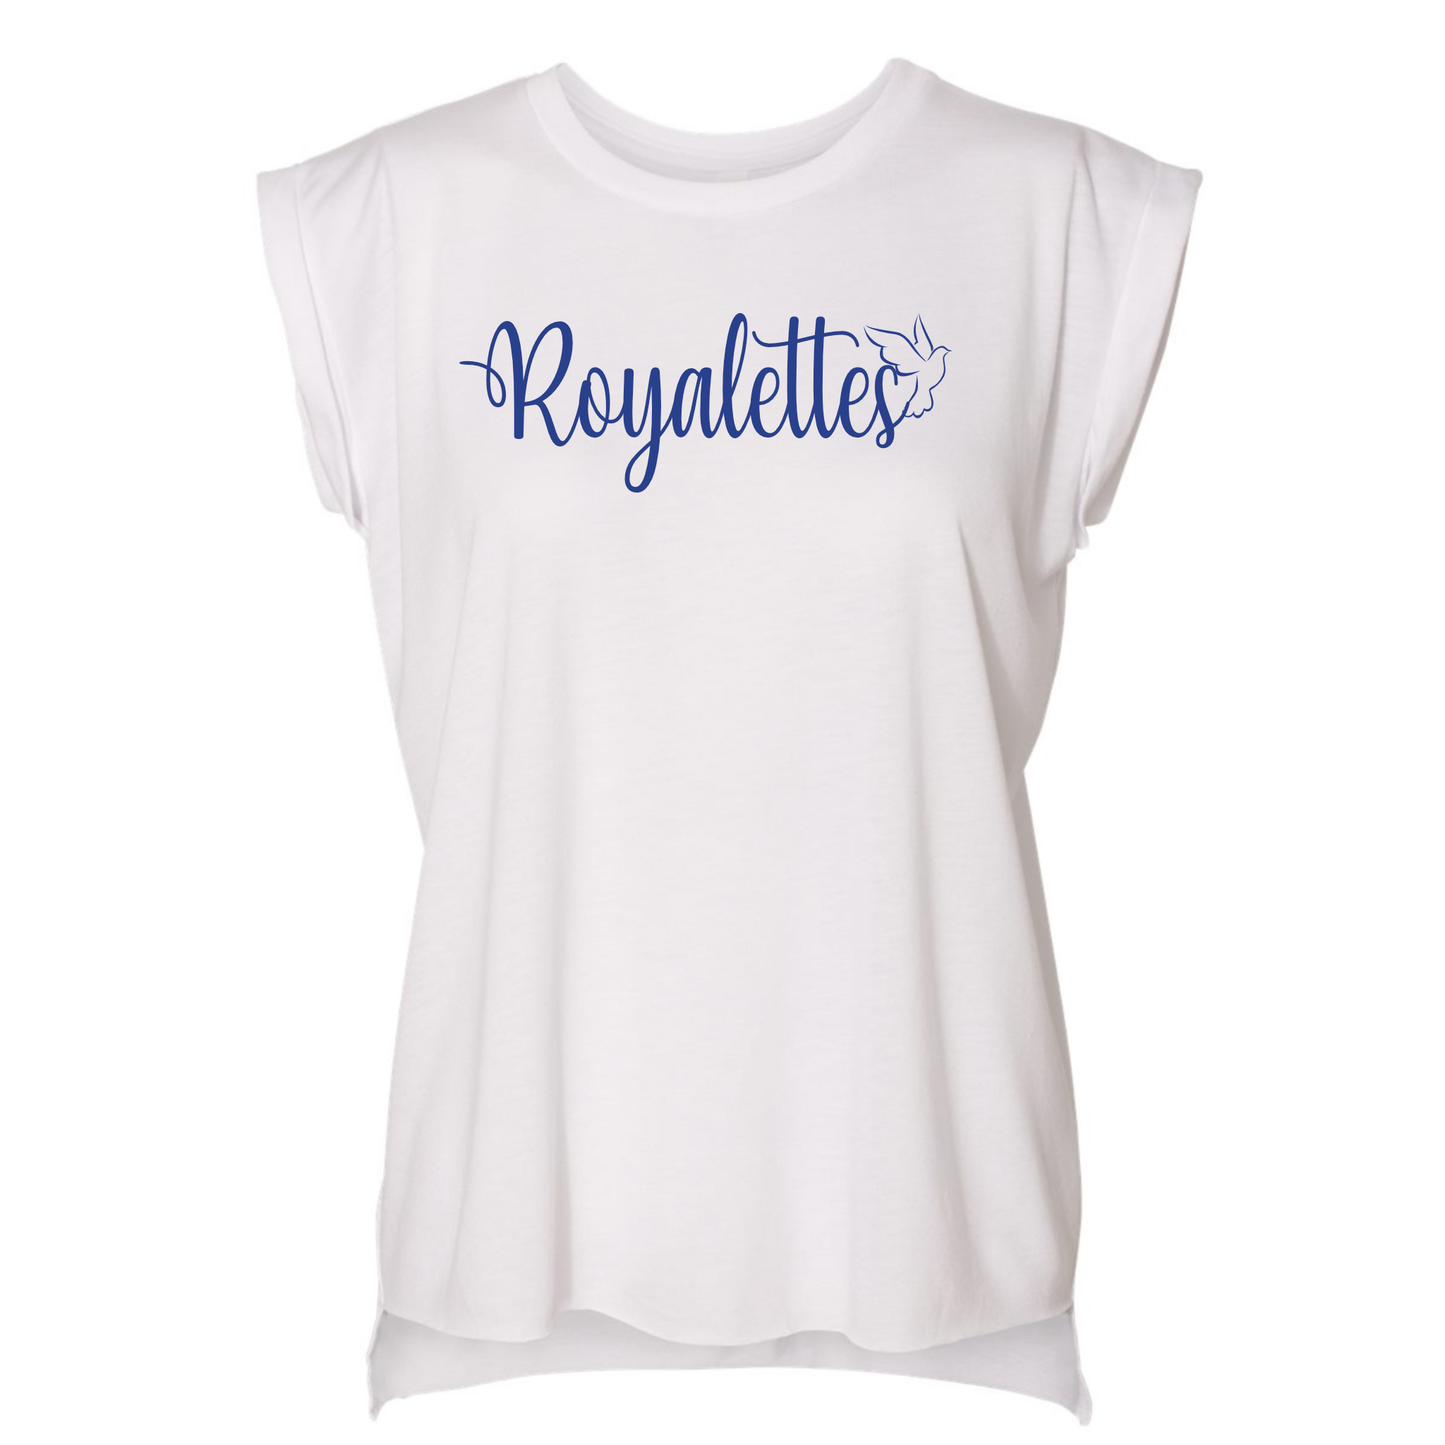 Royalettes White Shirt